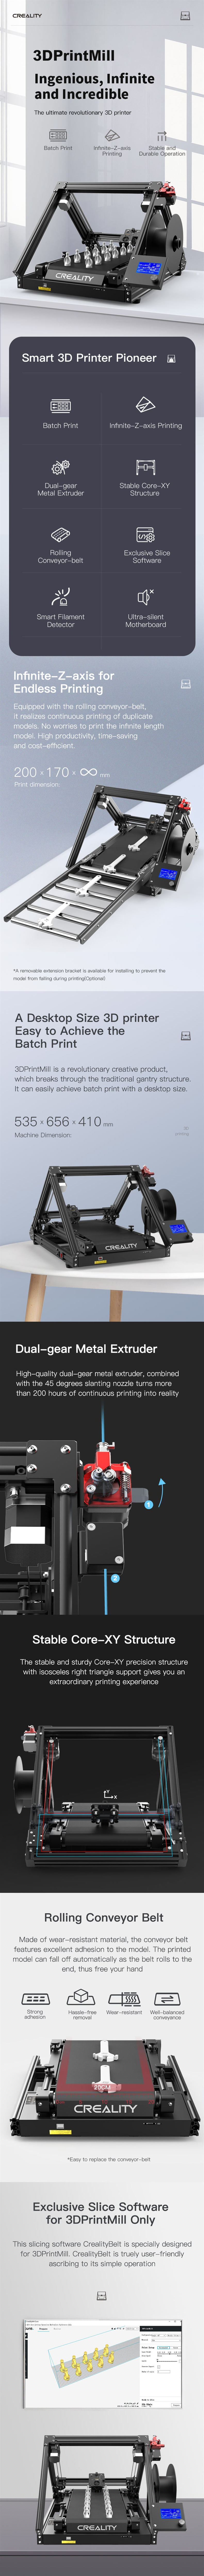 Creality 3D® CR-30 3DPrintMill 3D Printer Product Description